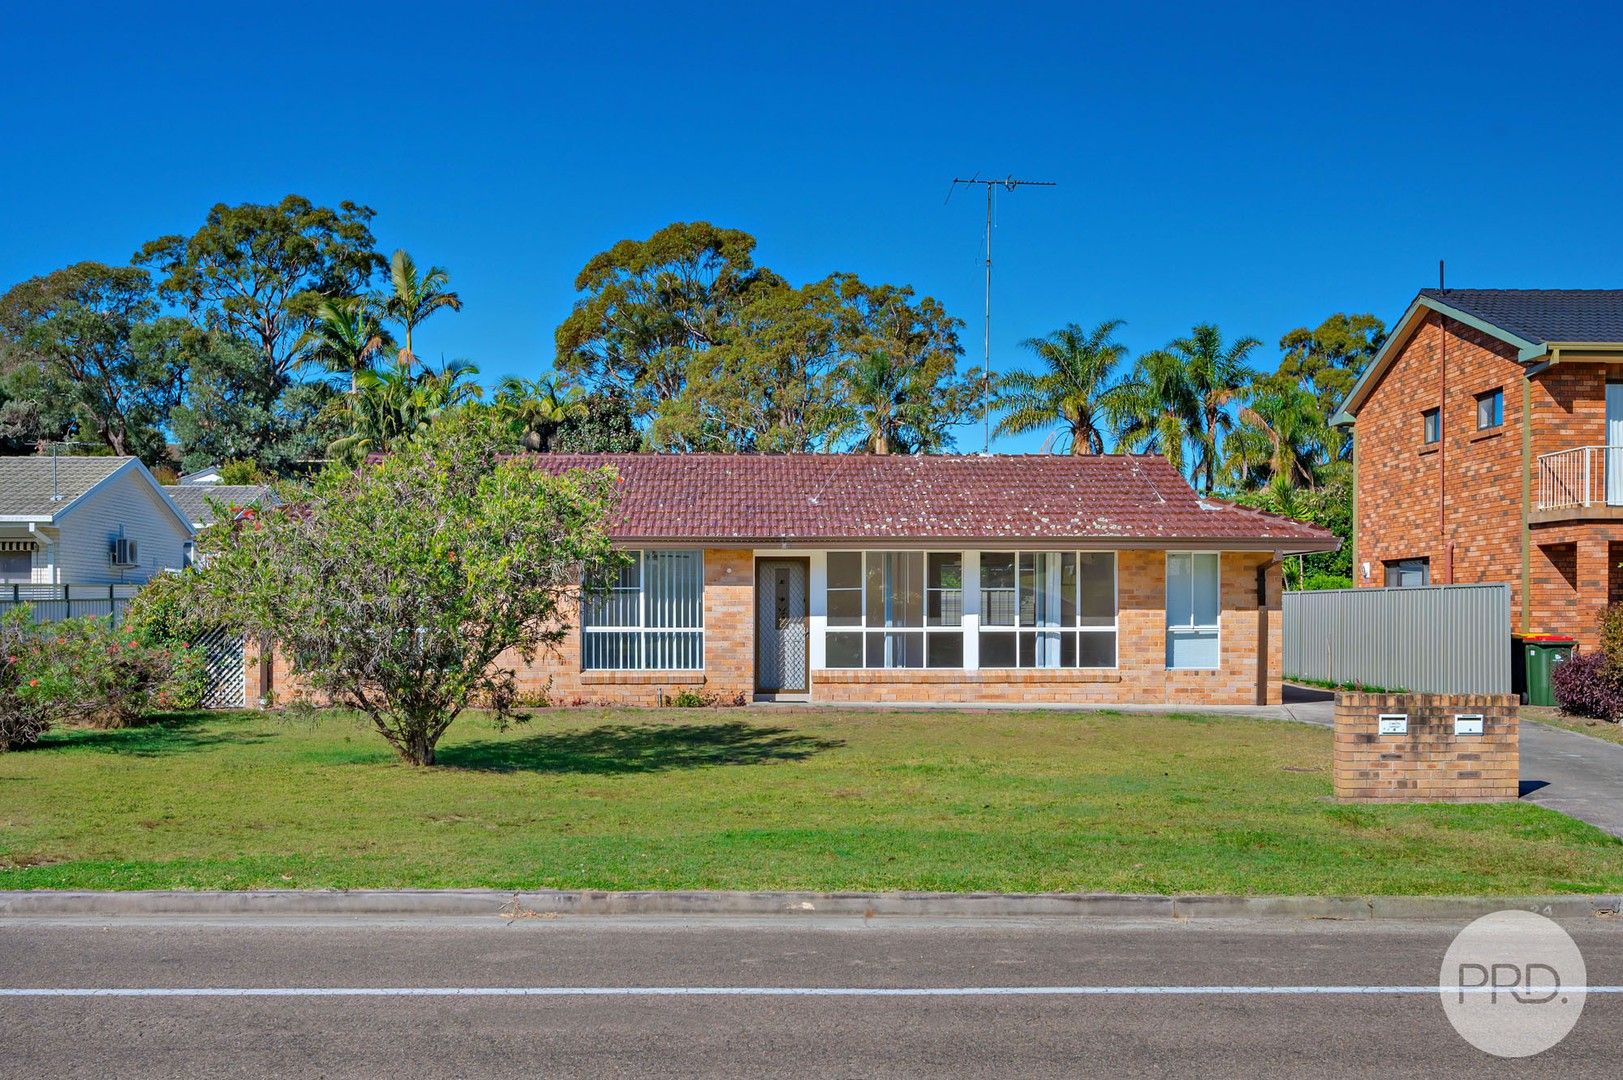 3 bedrooms House in 24 Spinnaker Way CORLETTE NSW, 2315